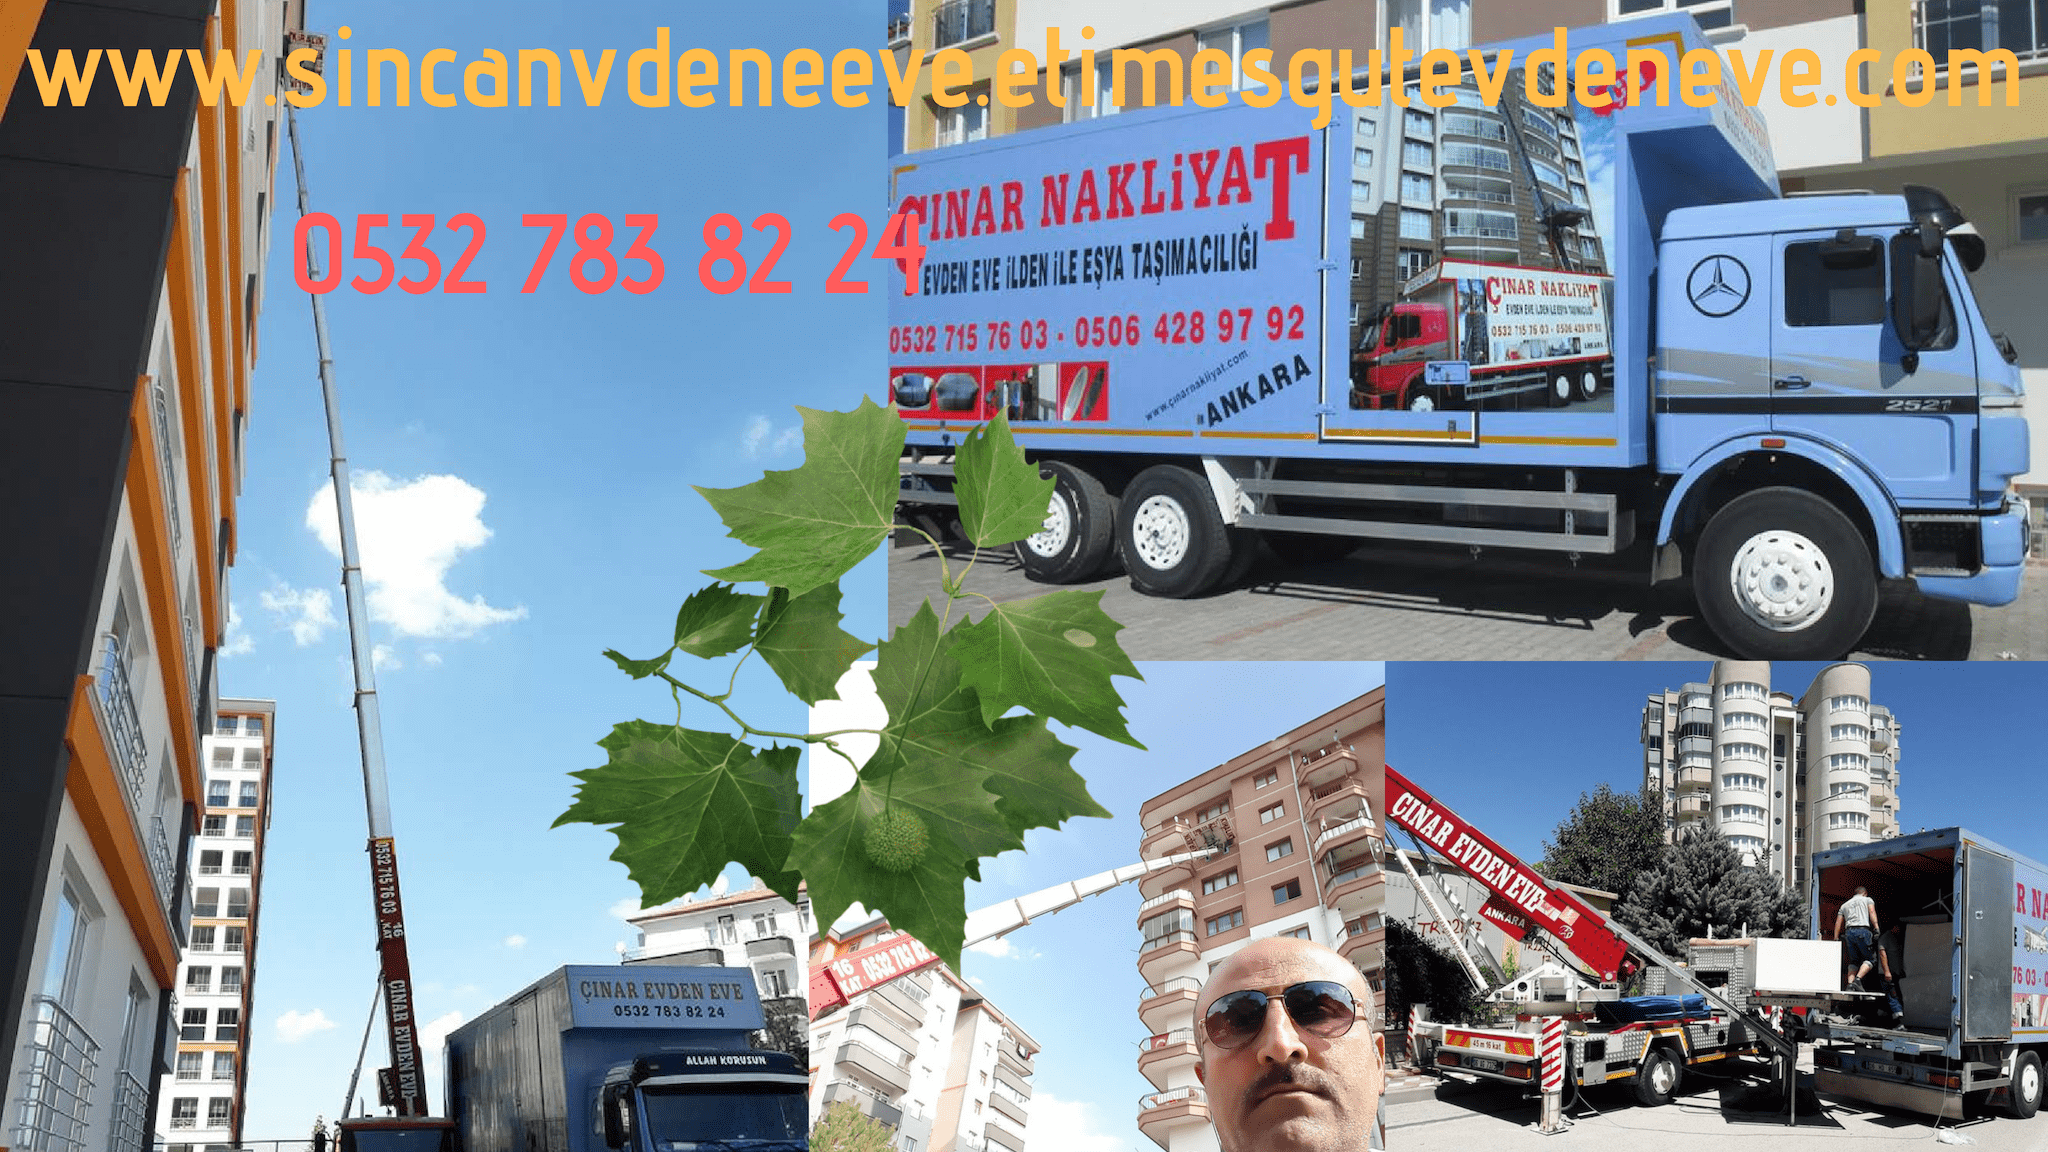 Ankara Yenimahalle Ev taşıma asansörü kiralama ankara 0532 715 76 03